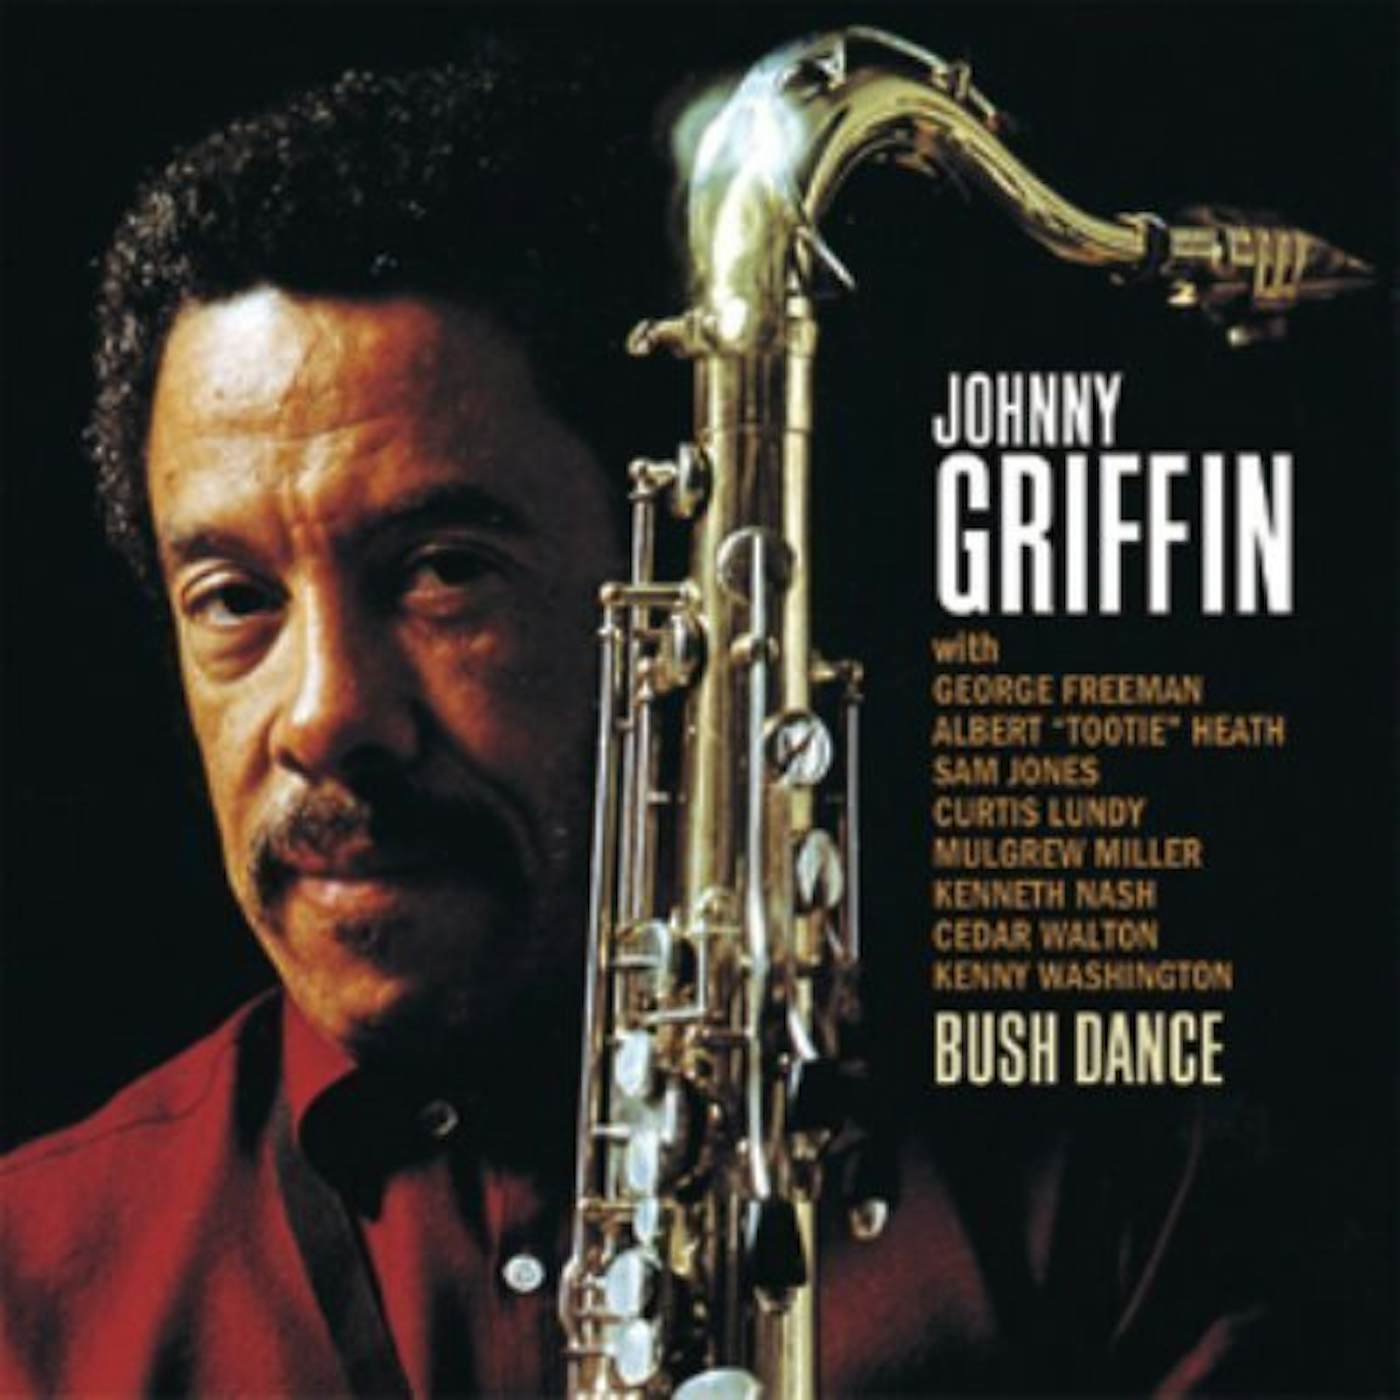 Johnny Griffin BUSH DANCE CD